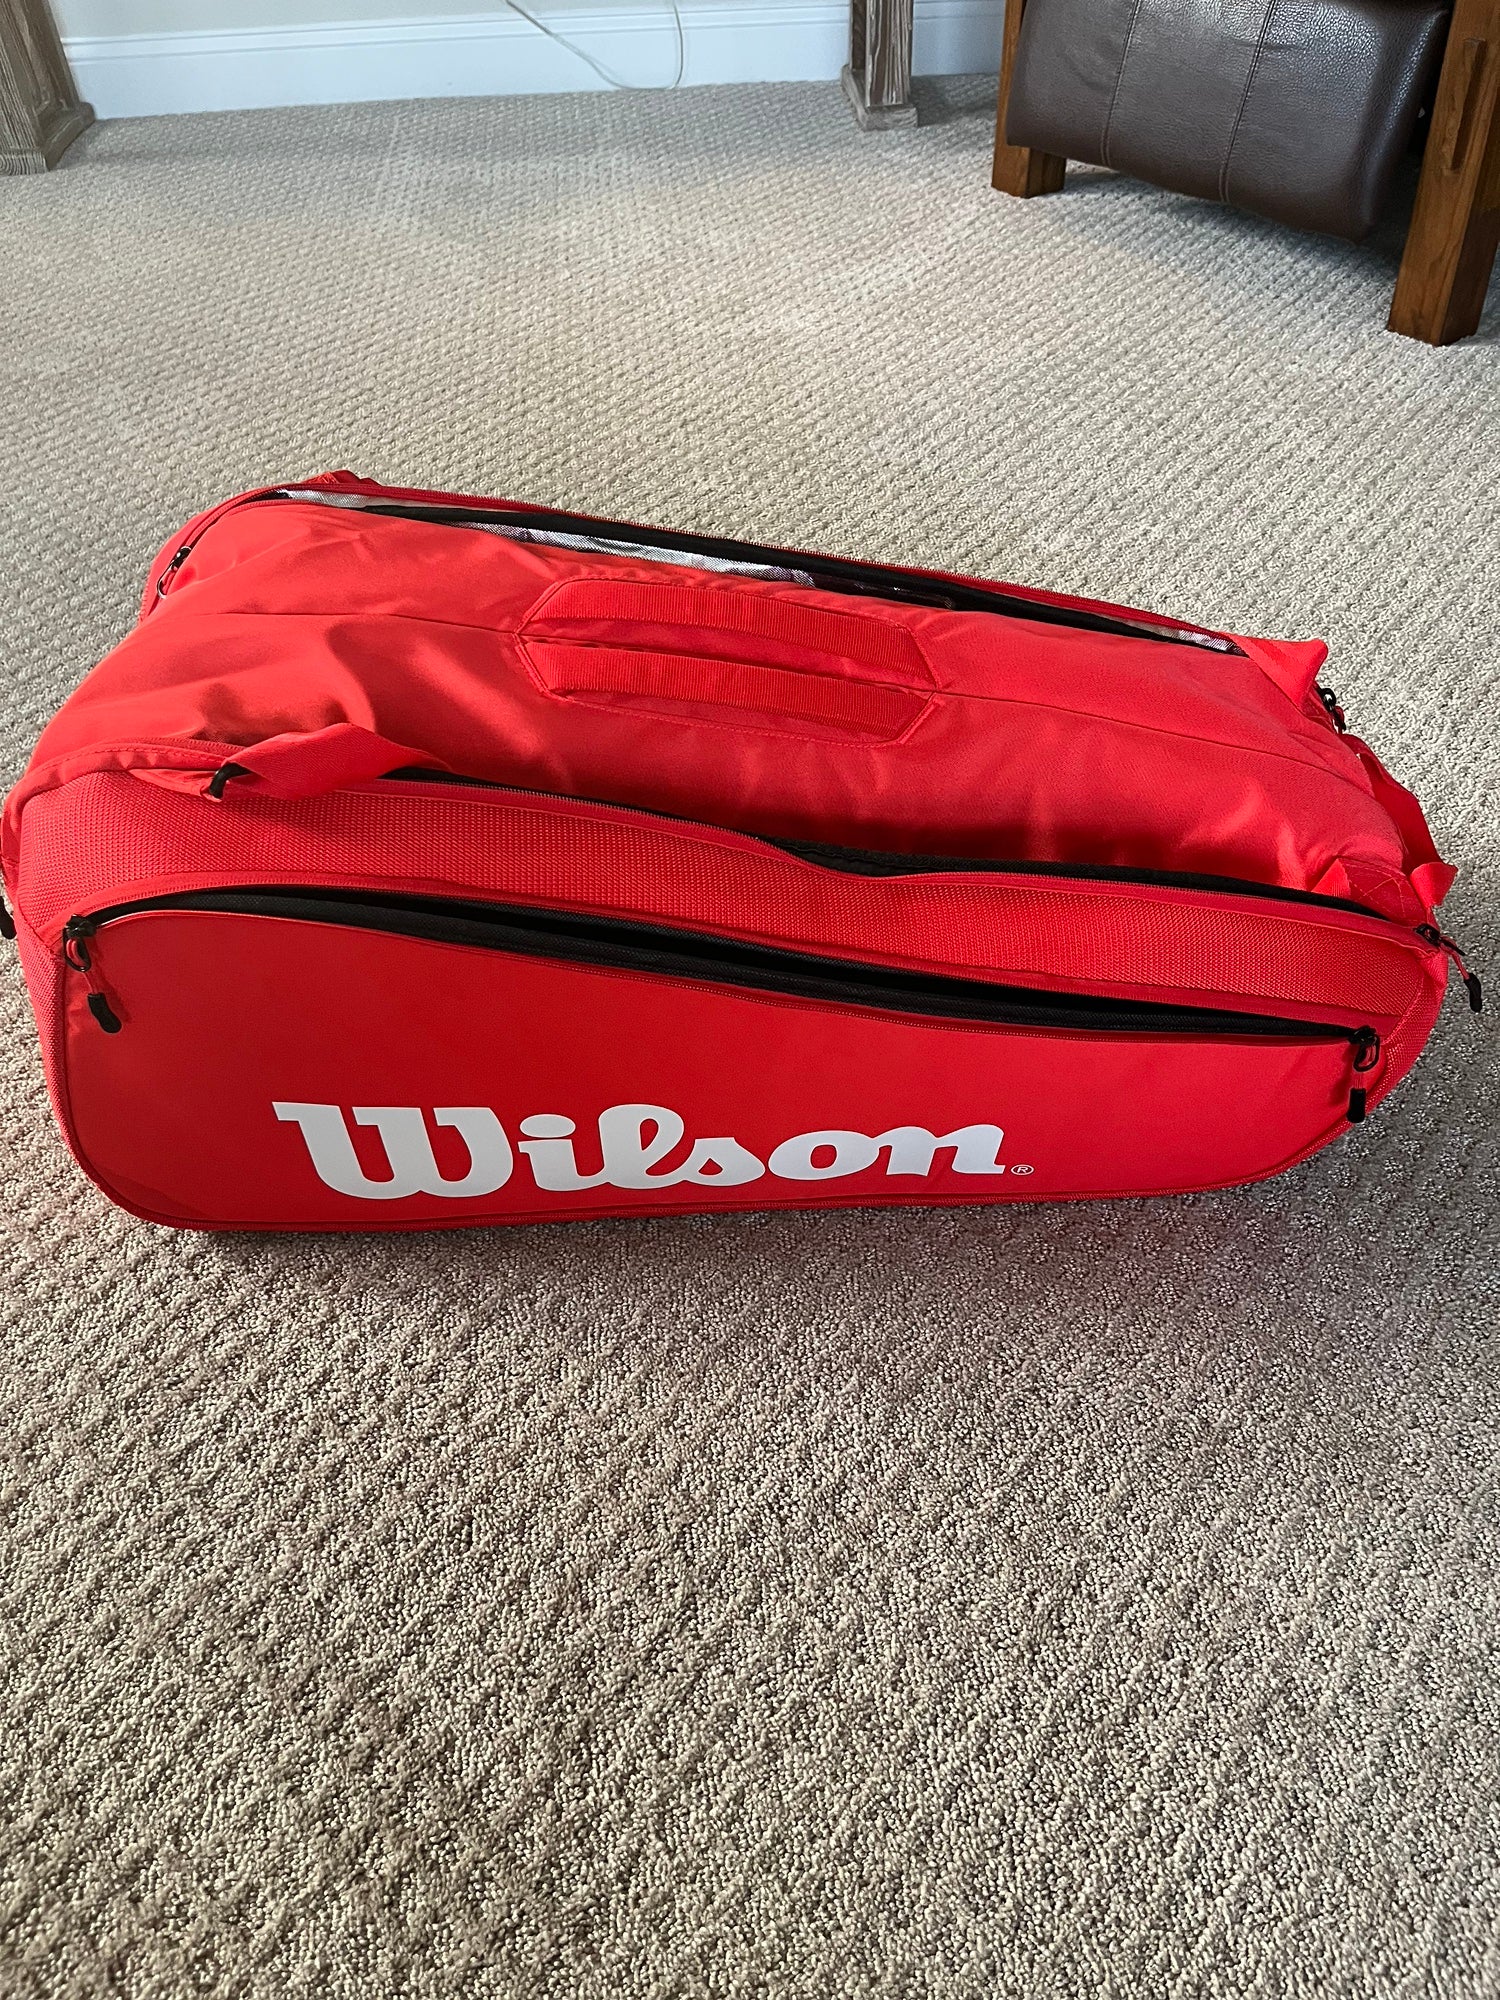 Wilson TOUR 9 PACK bag   SidelineSwap